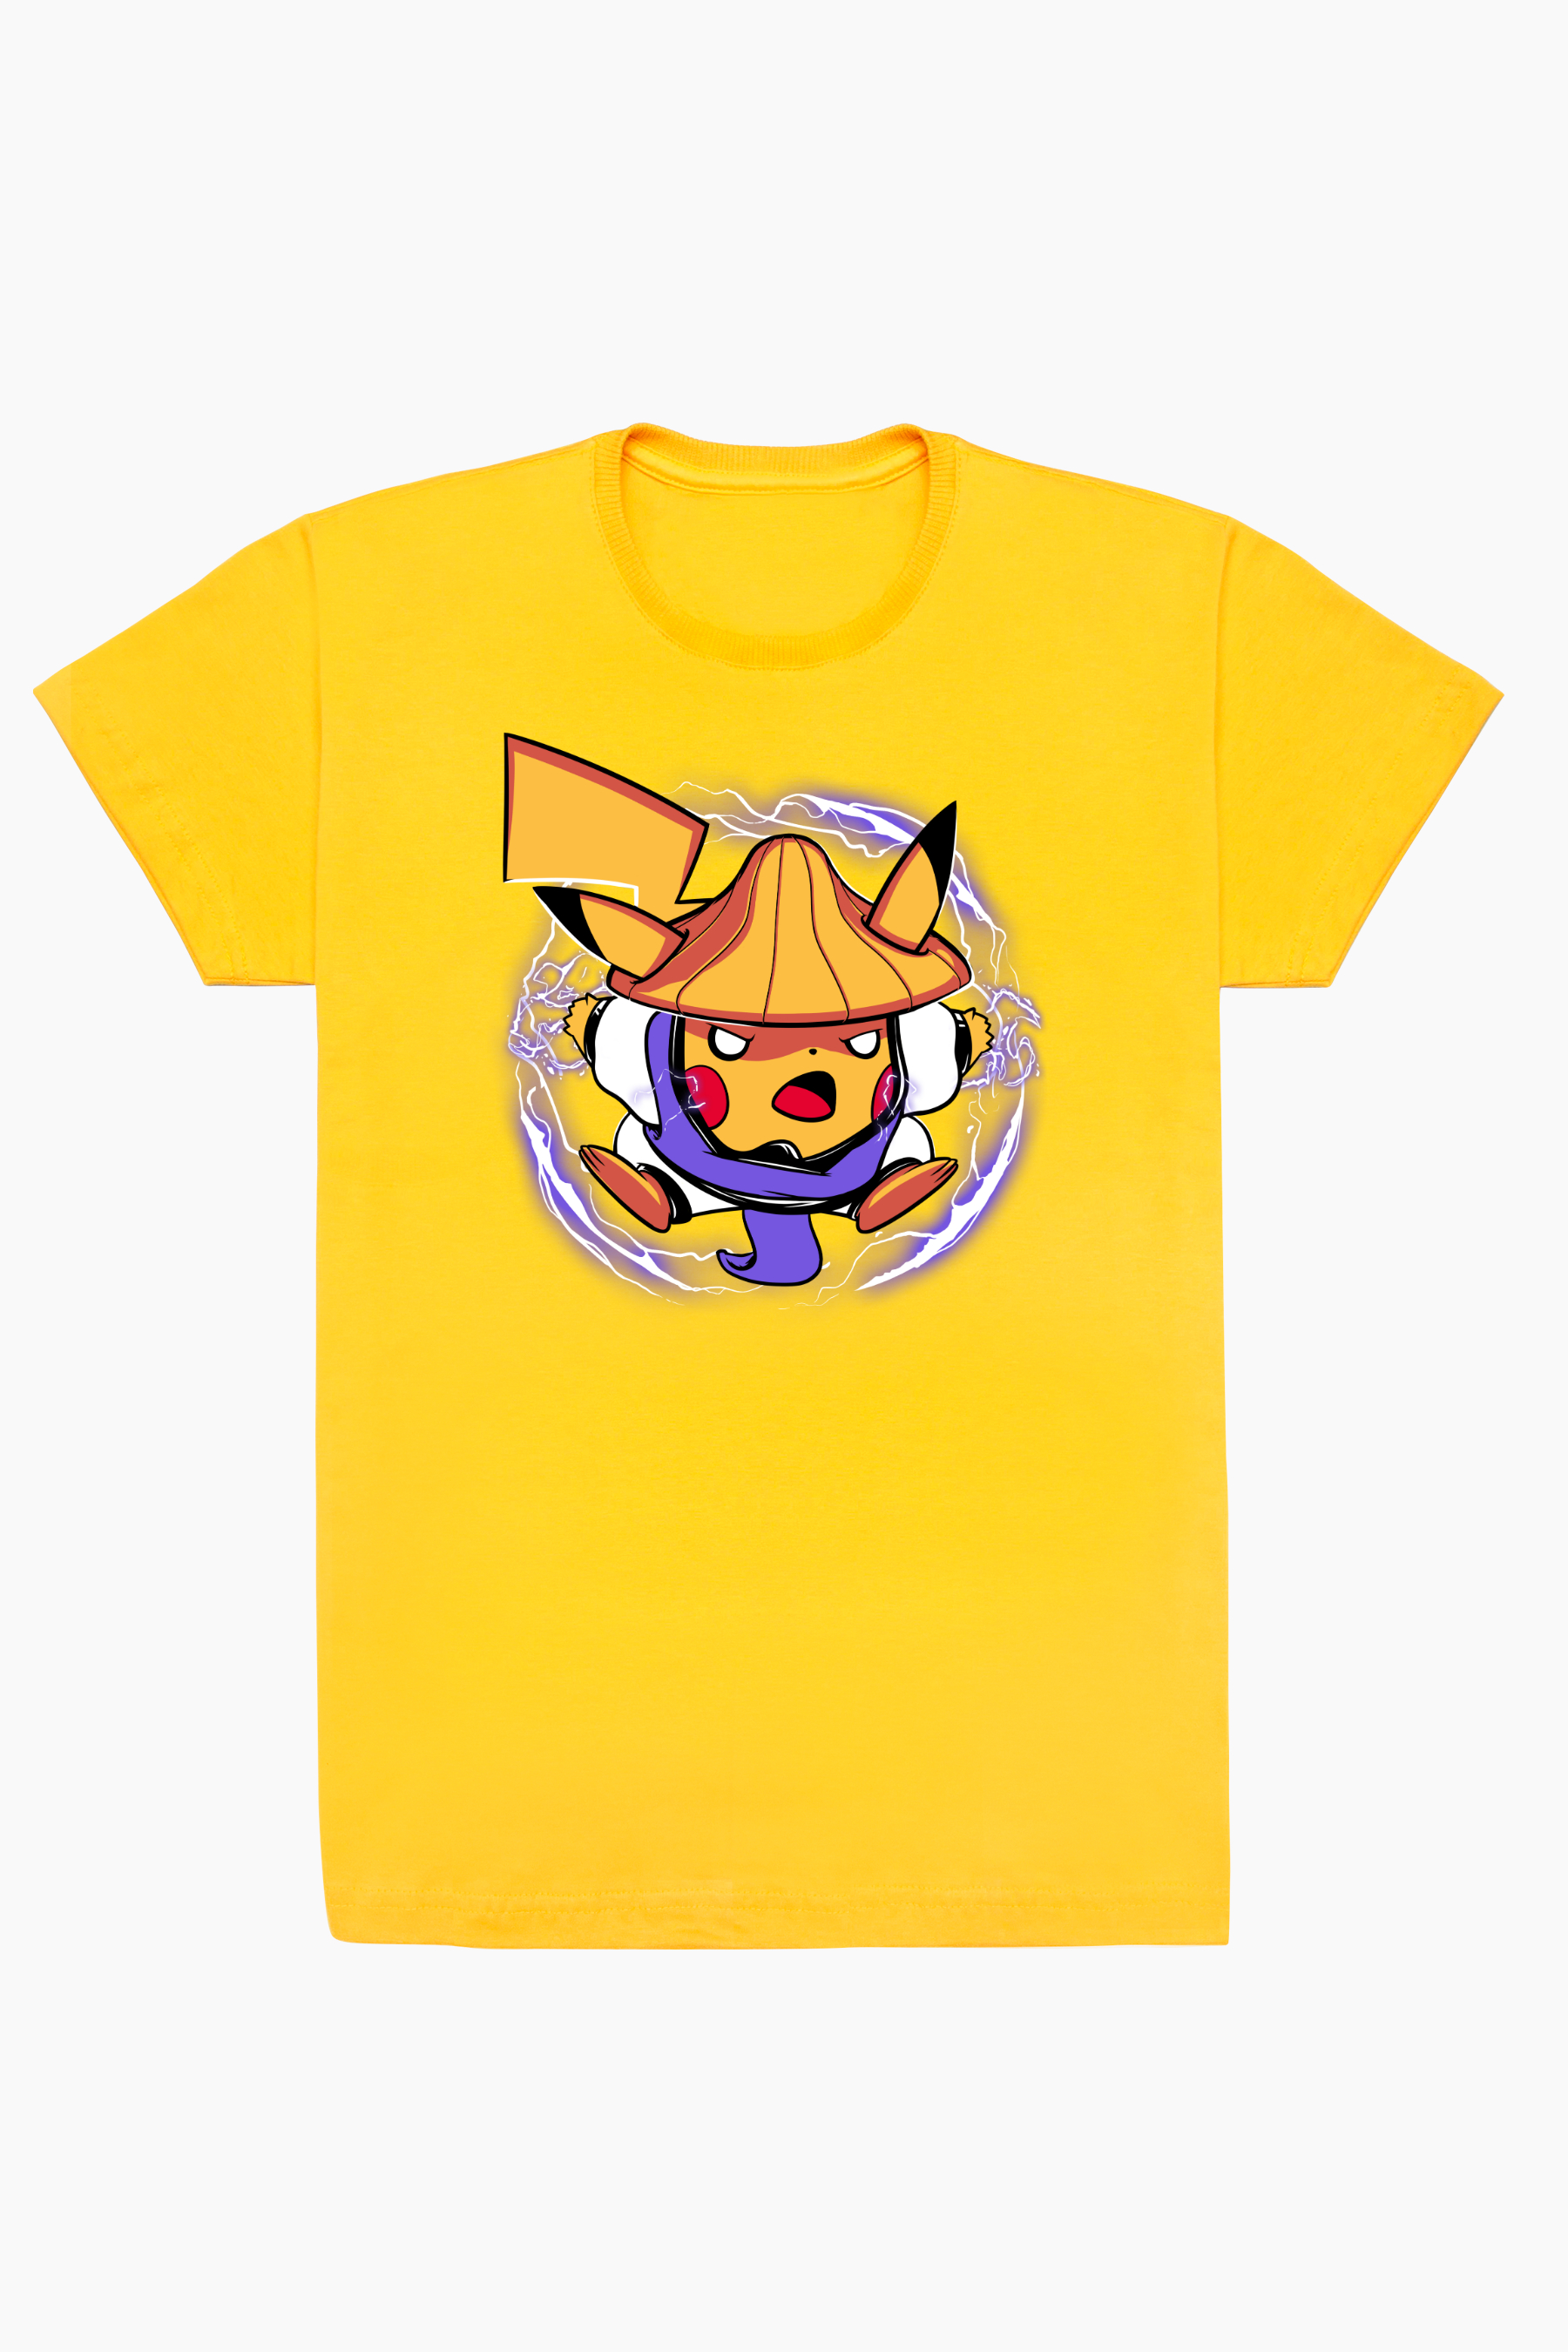 Camiseta Babylook Colorida Goku Super Saiyajin Deus